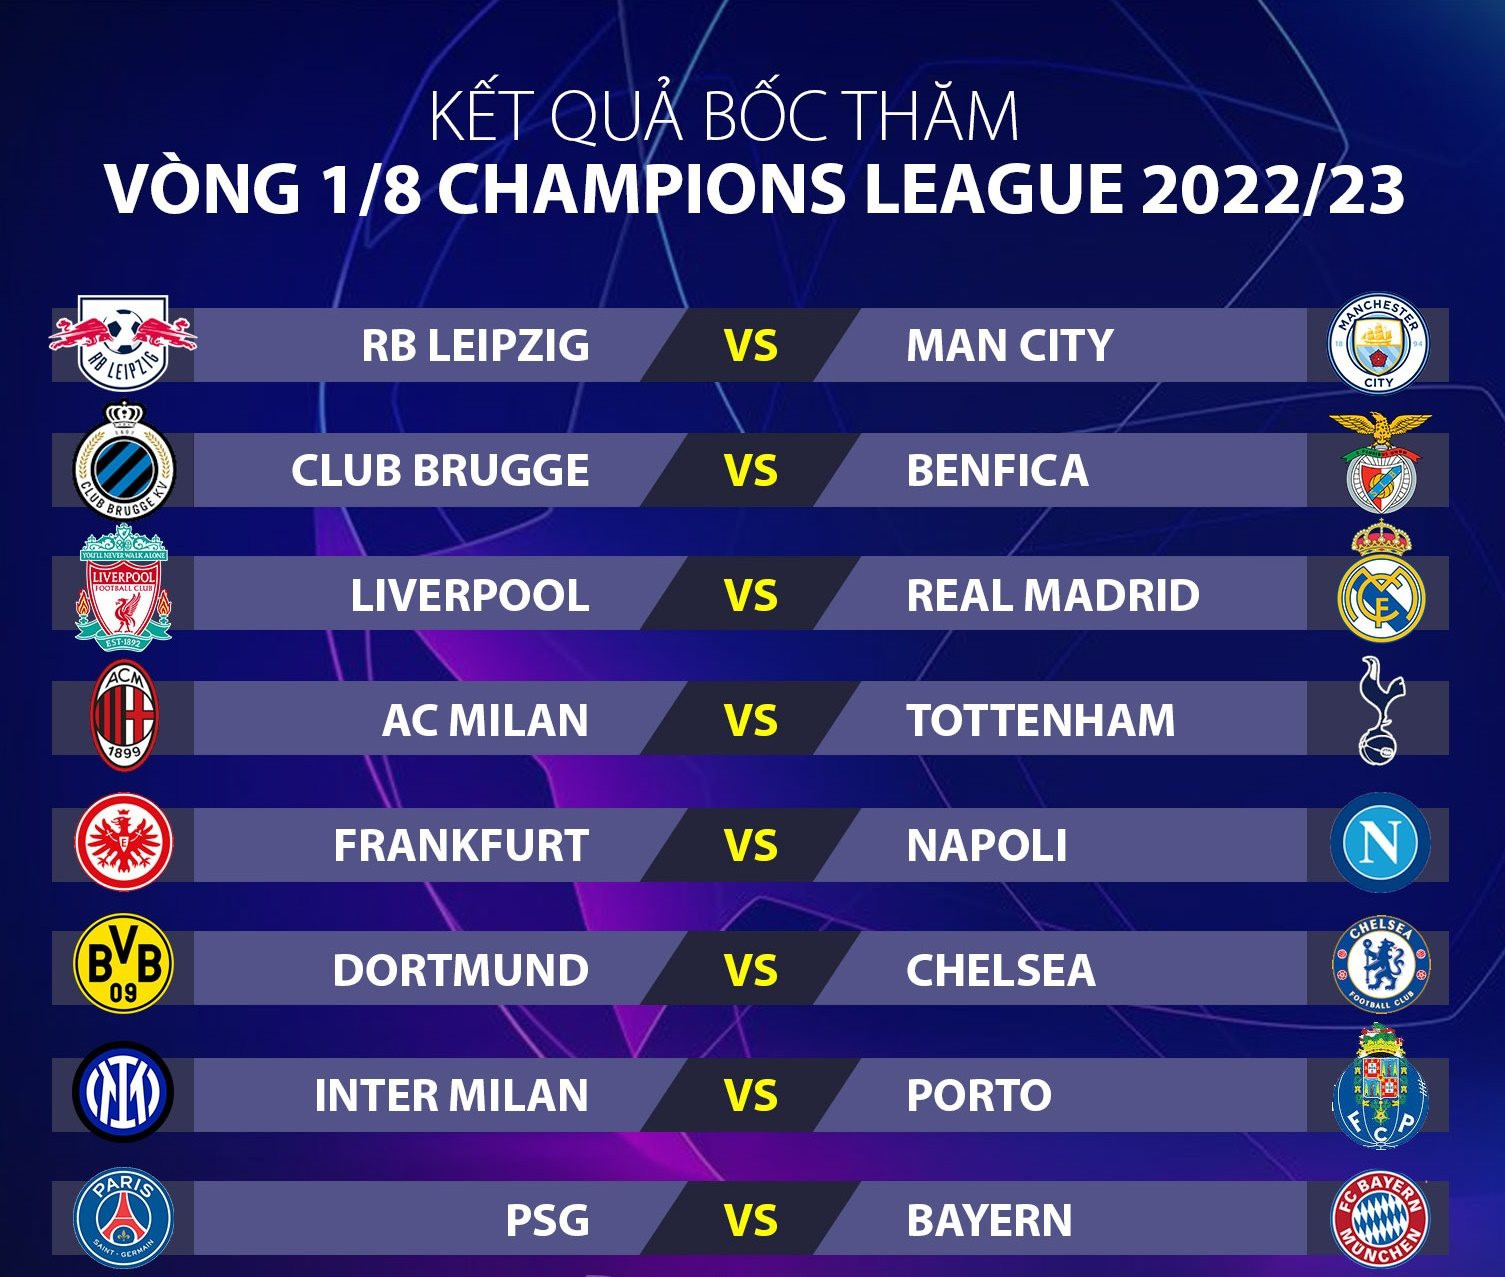 champions-league-22-23-ket-qua-boc-tham-vong-1-8.jpg